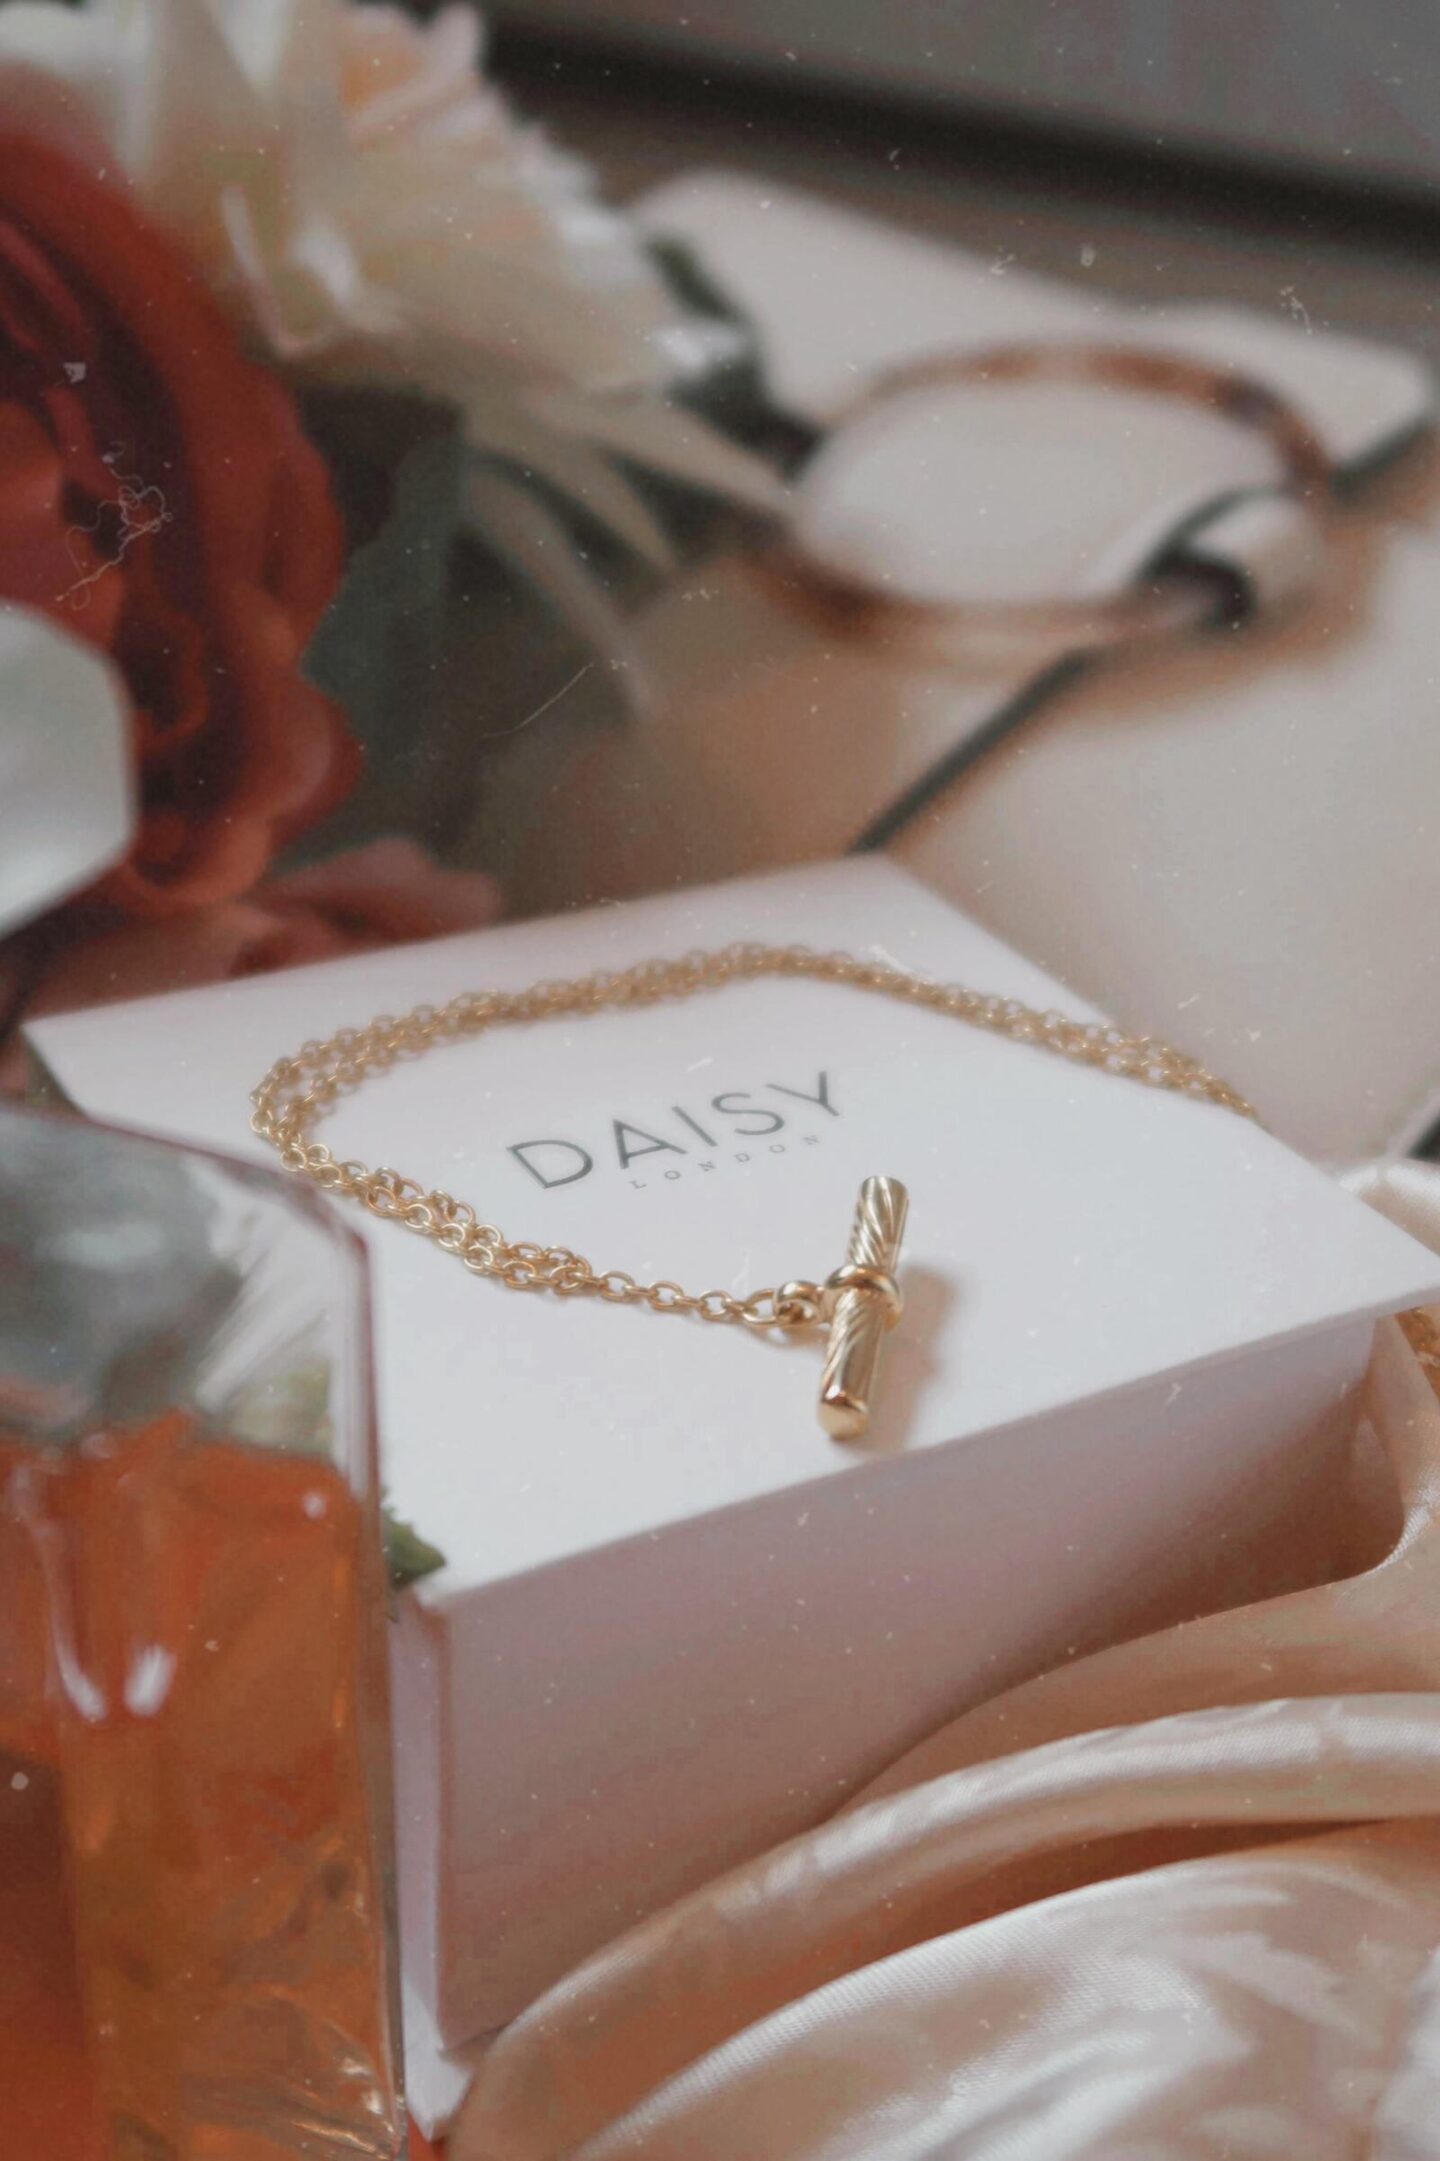 daisy london necklace